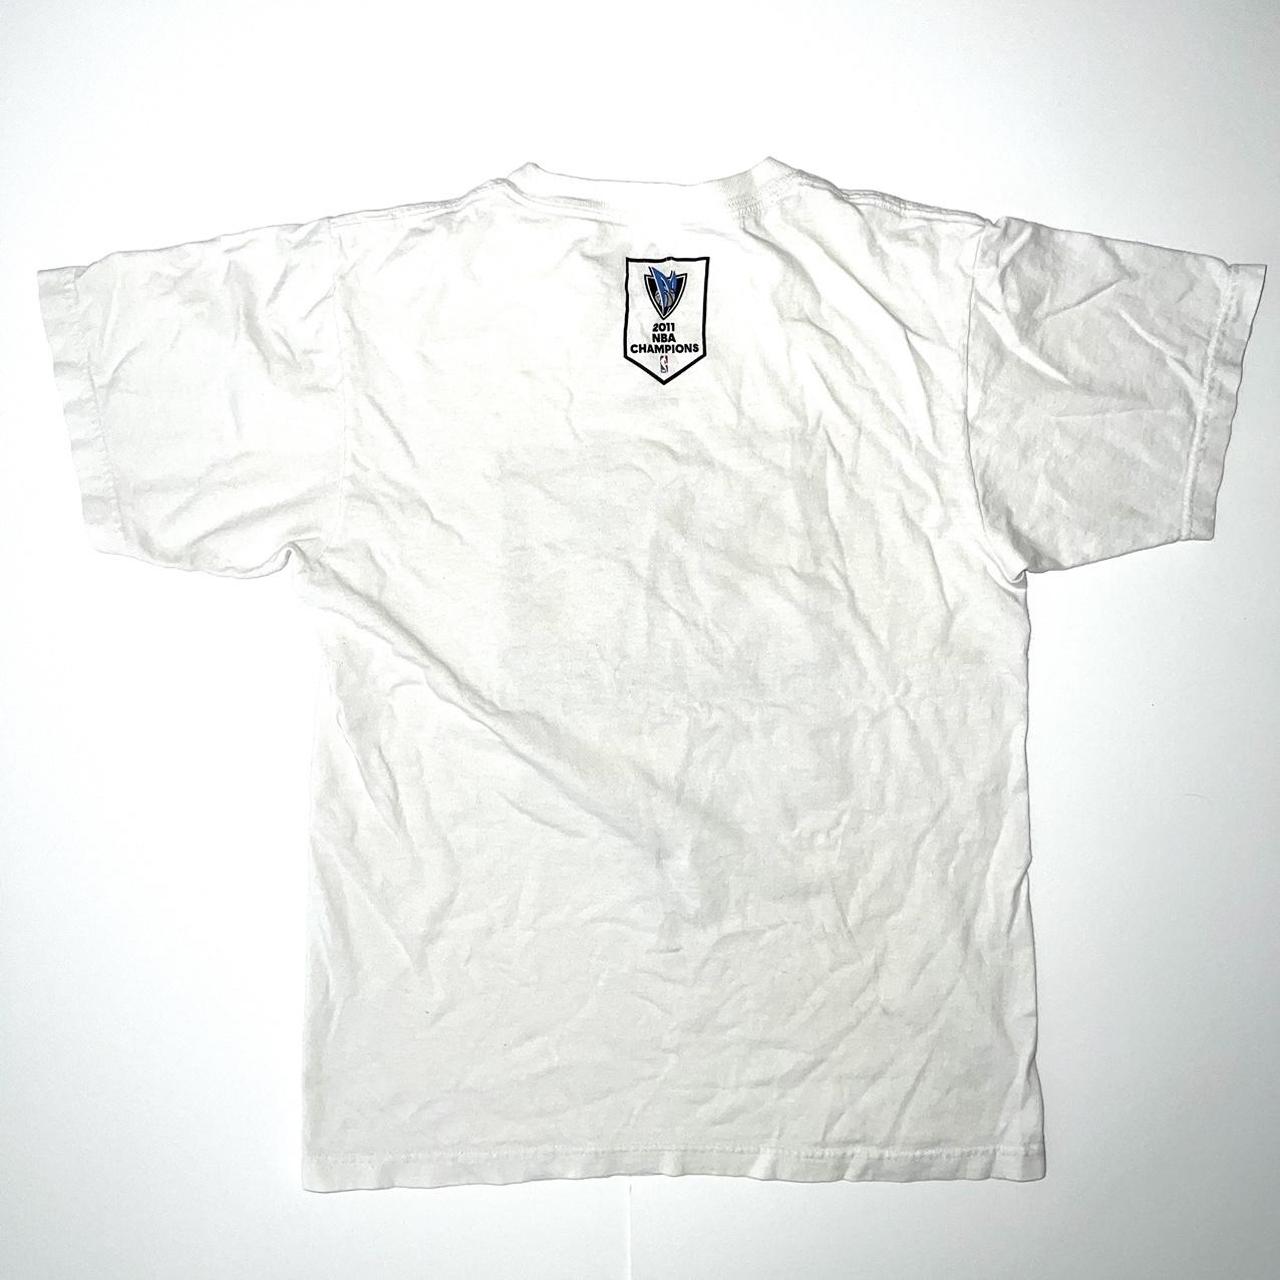 Dallas Mavericks 2011 NBA Champions Vintage T Shirt Adidas Size Large